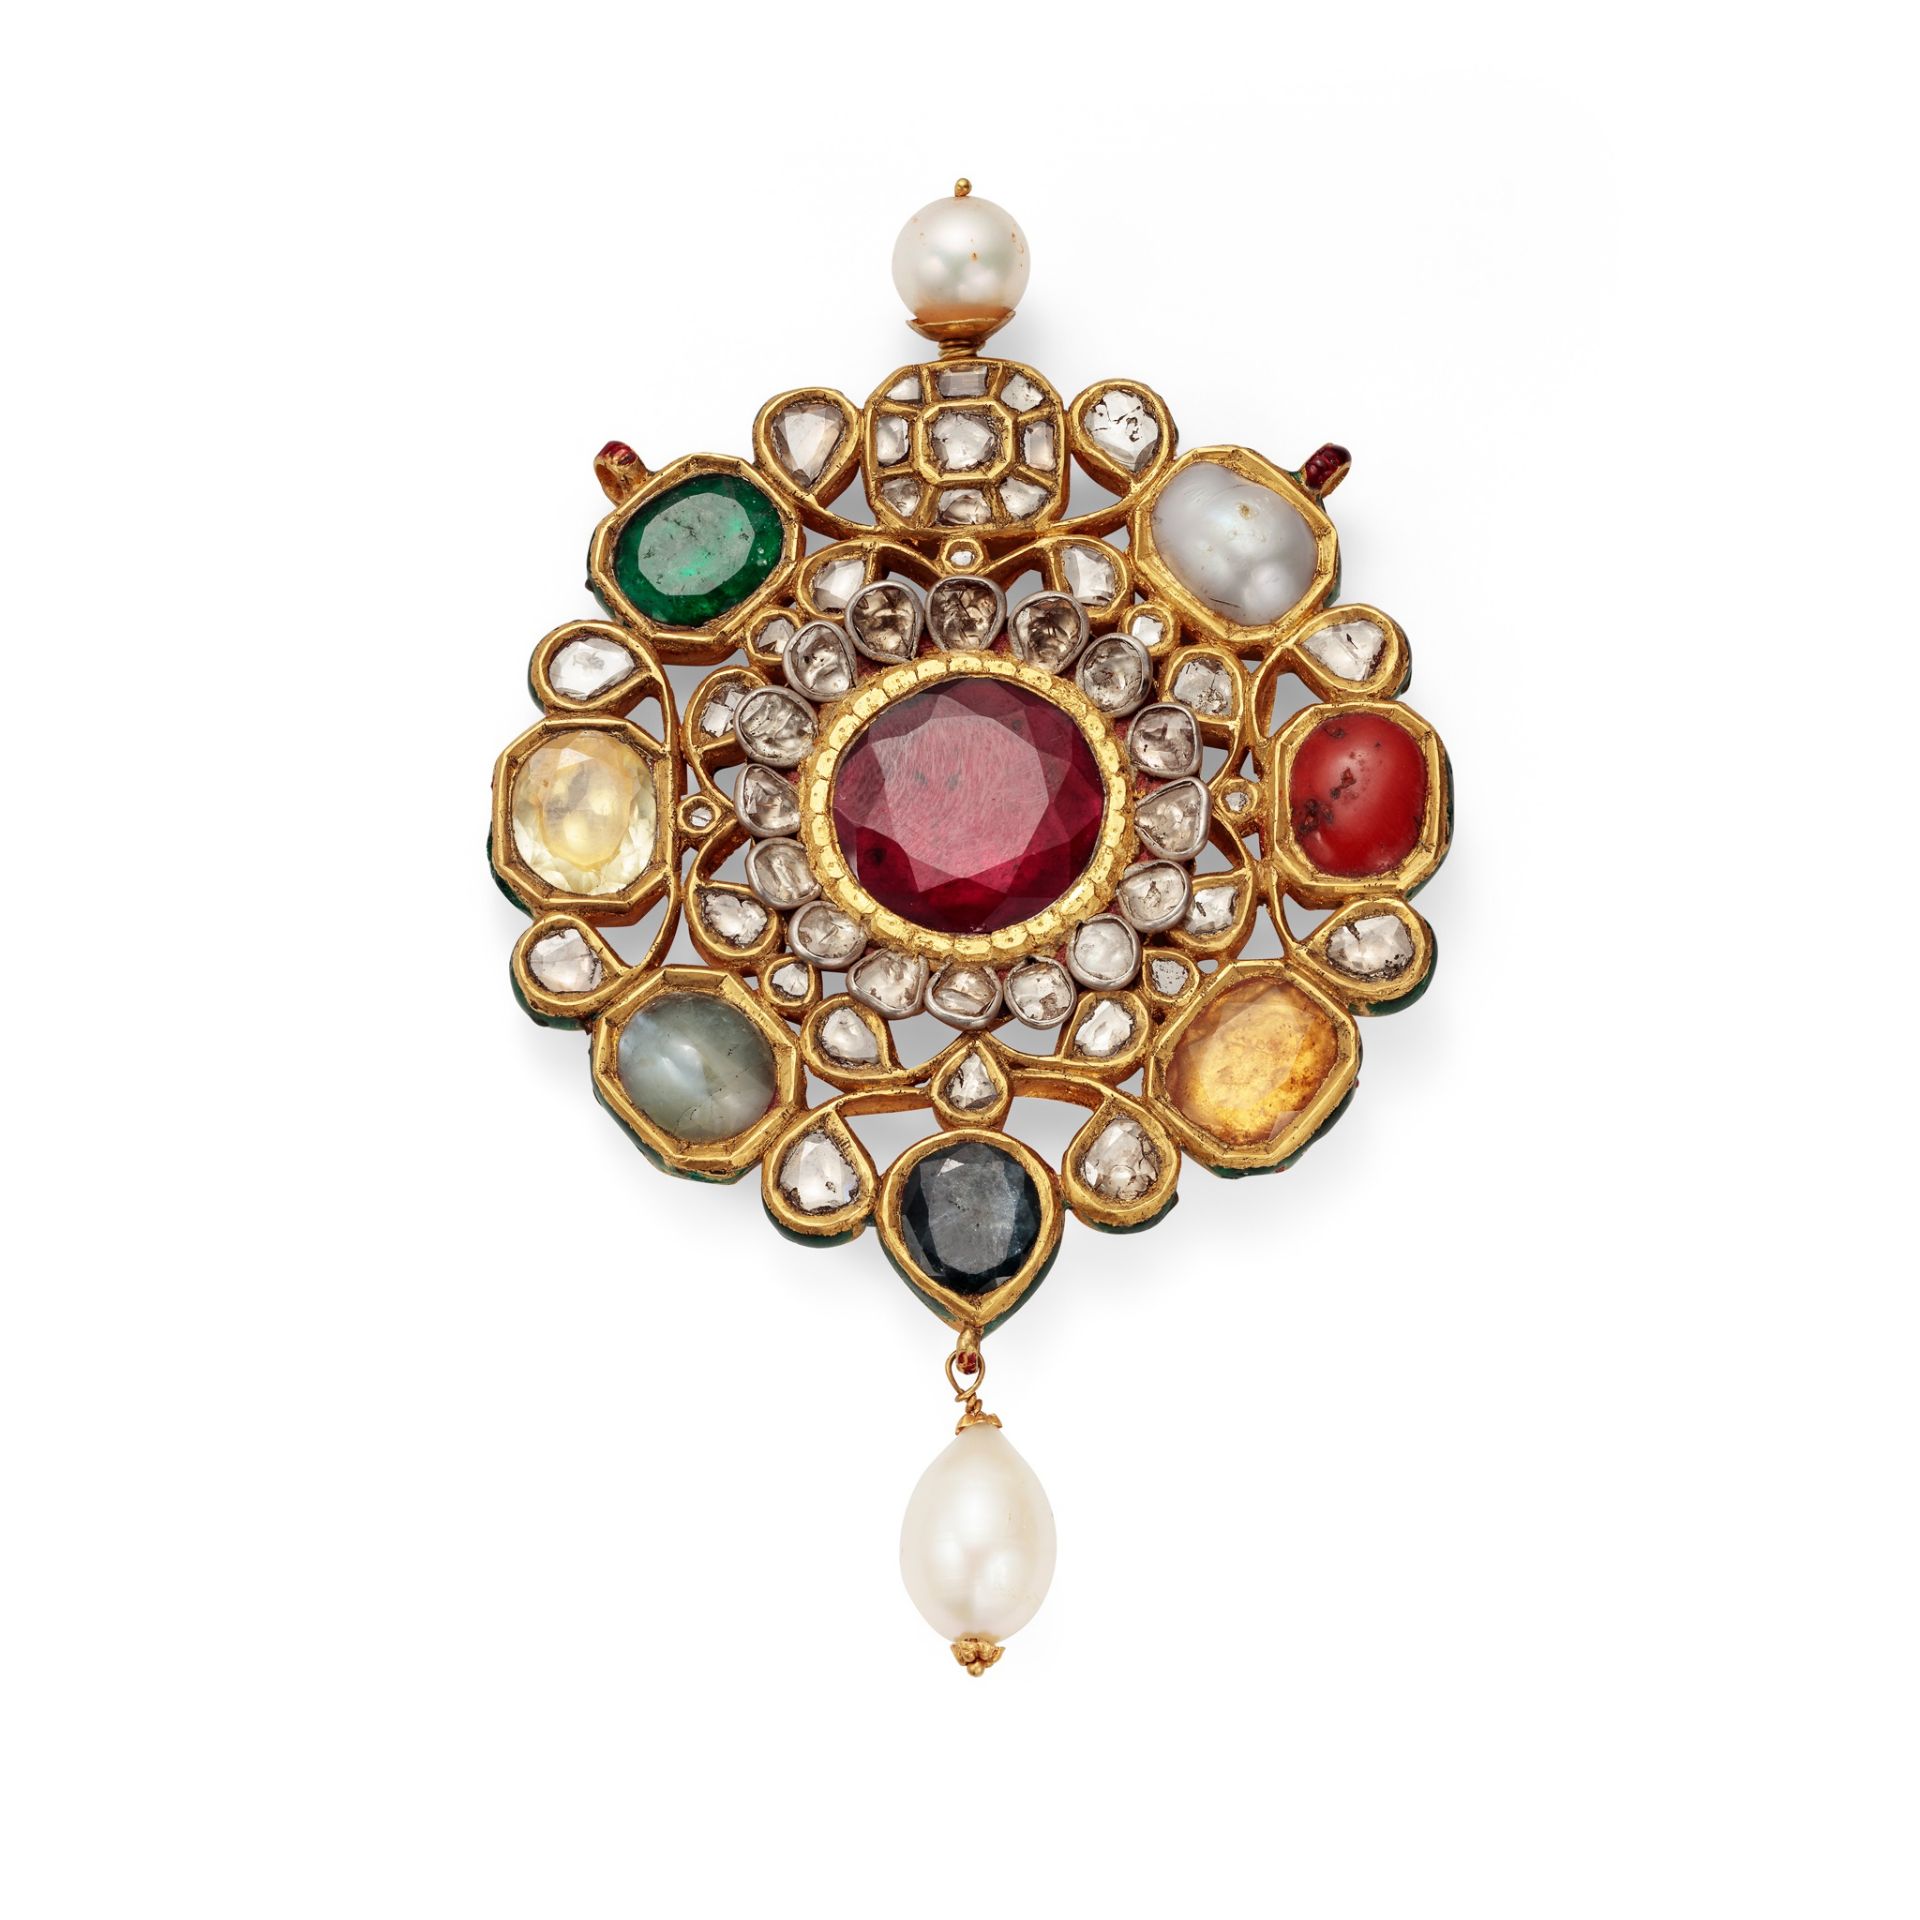 An Indian gem-set Navaratna pendant Designed as an octagonal openwork cluster, set with various